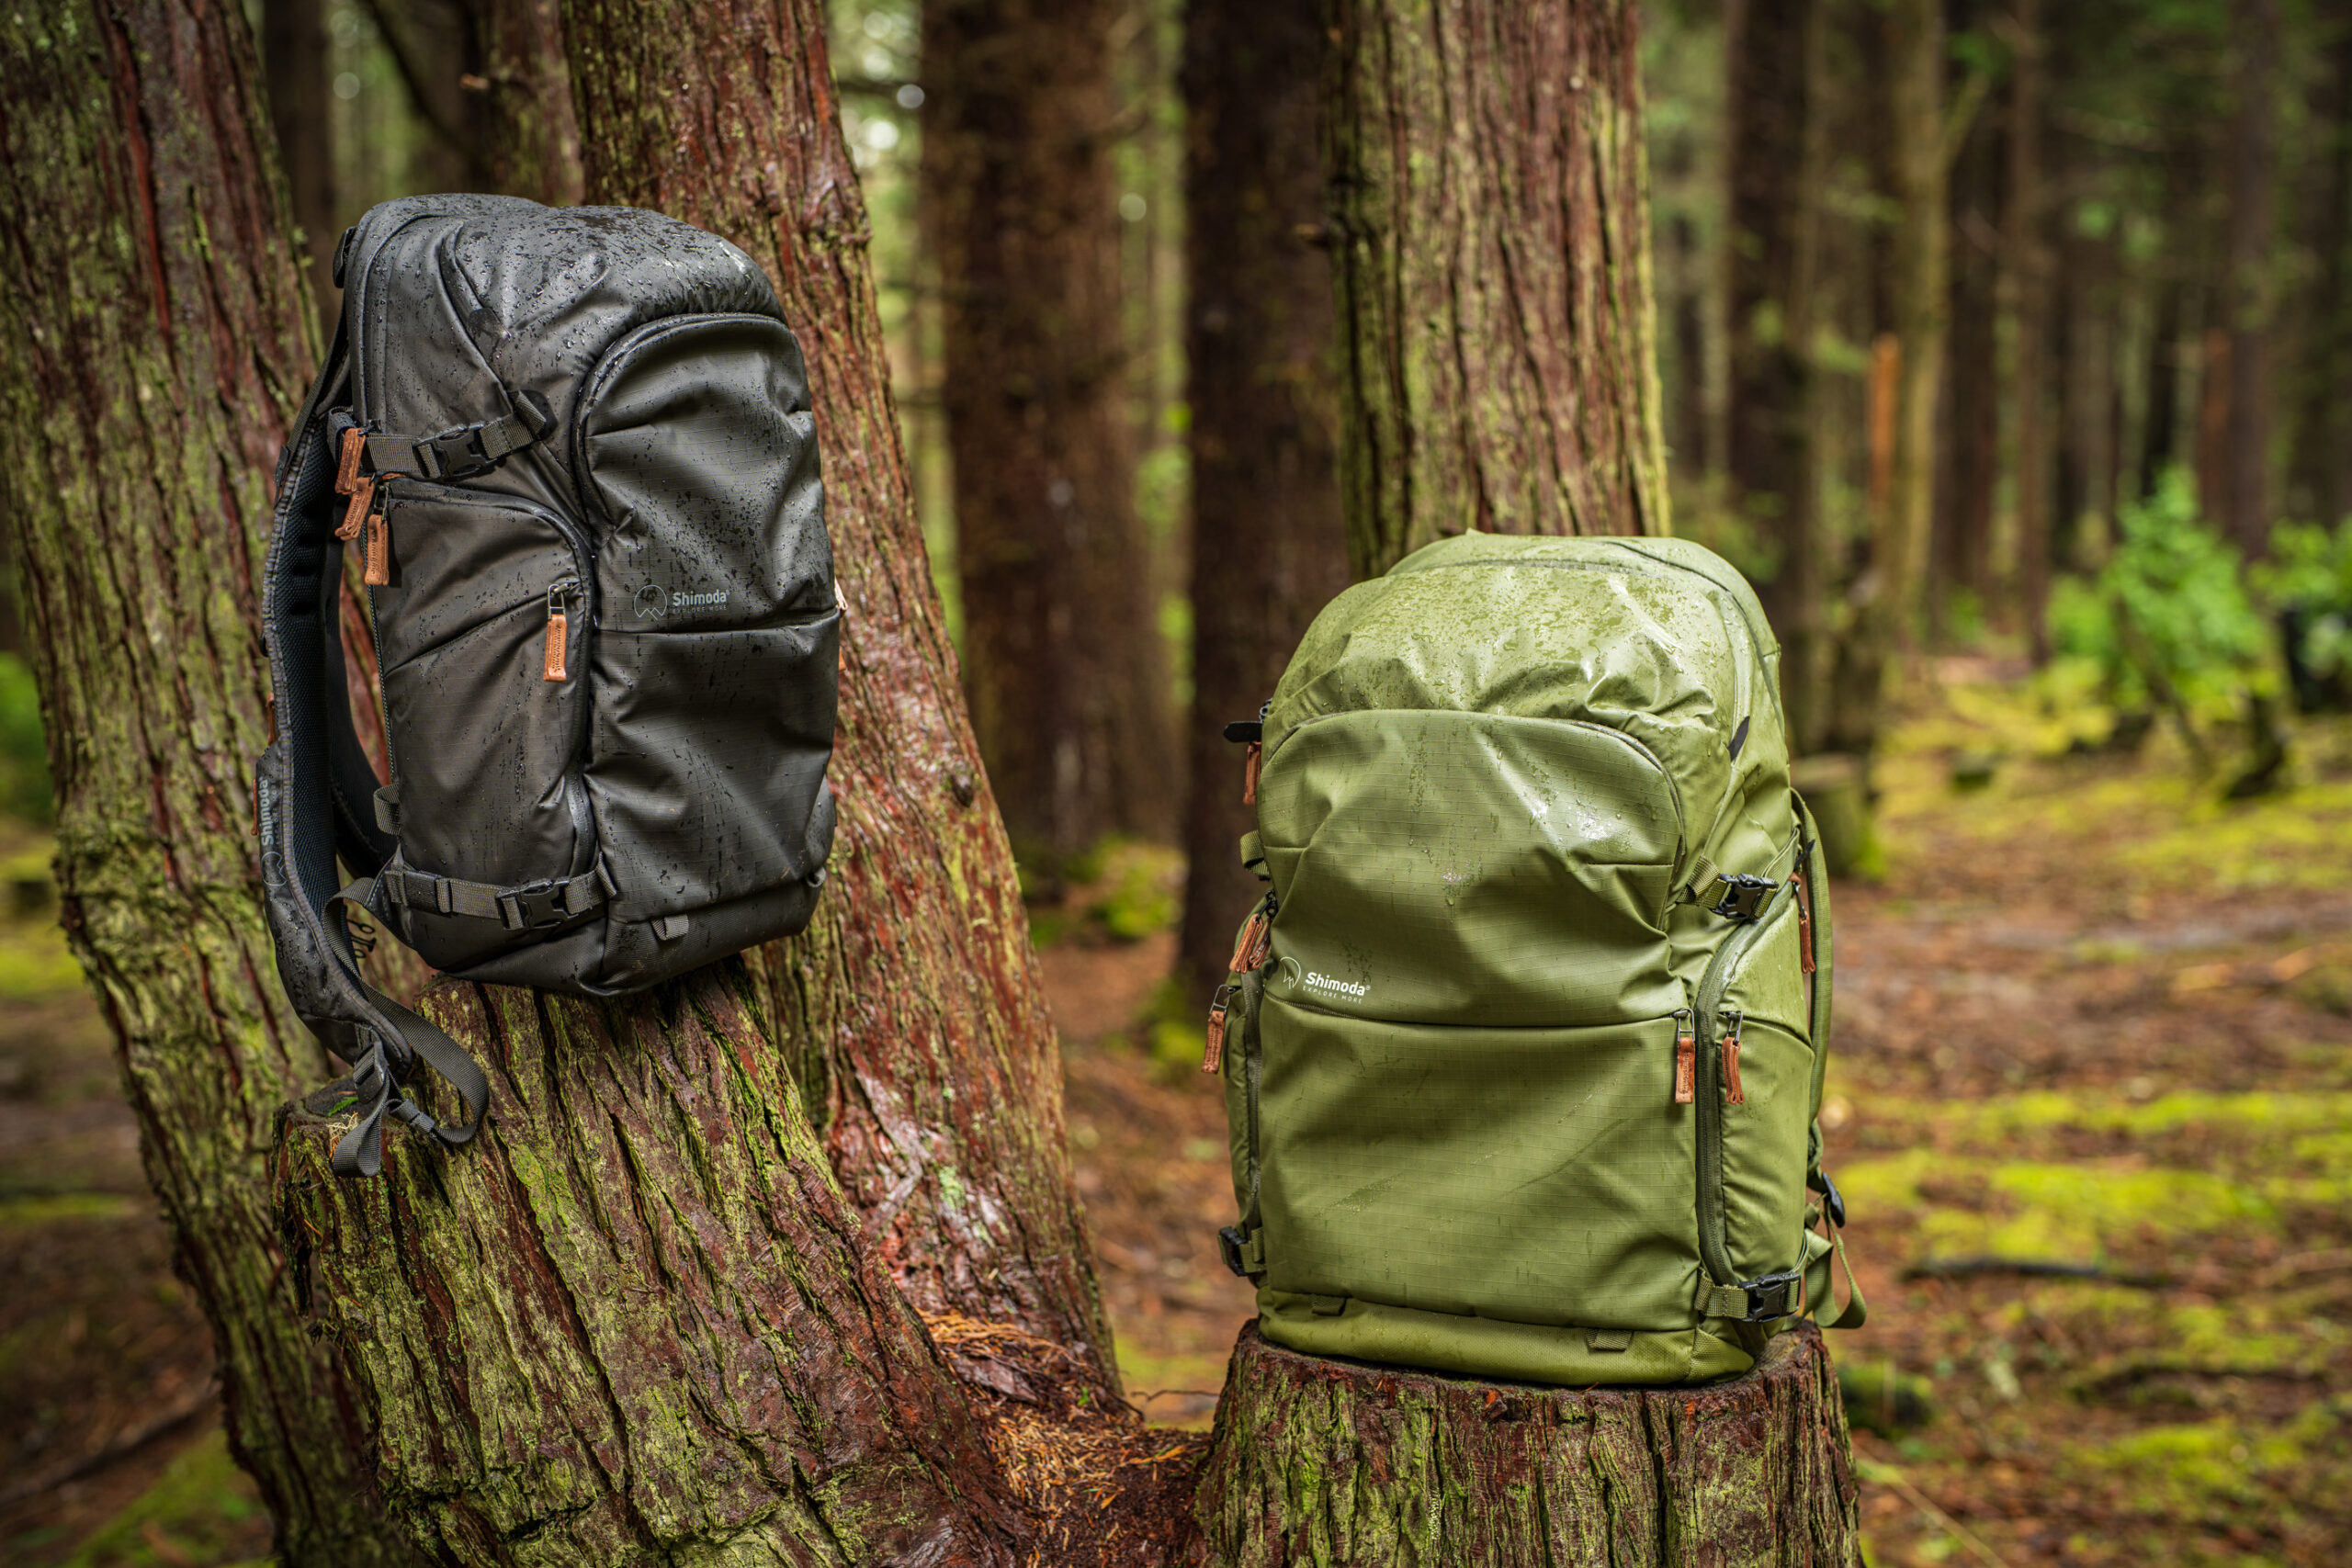 The Shimoda Designs Explore Version 2 camera backpack